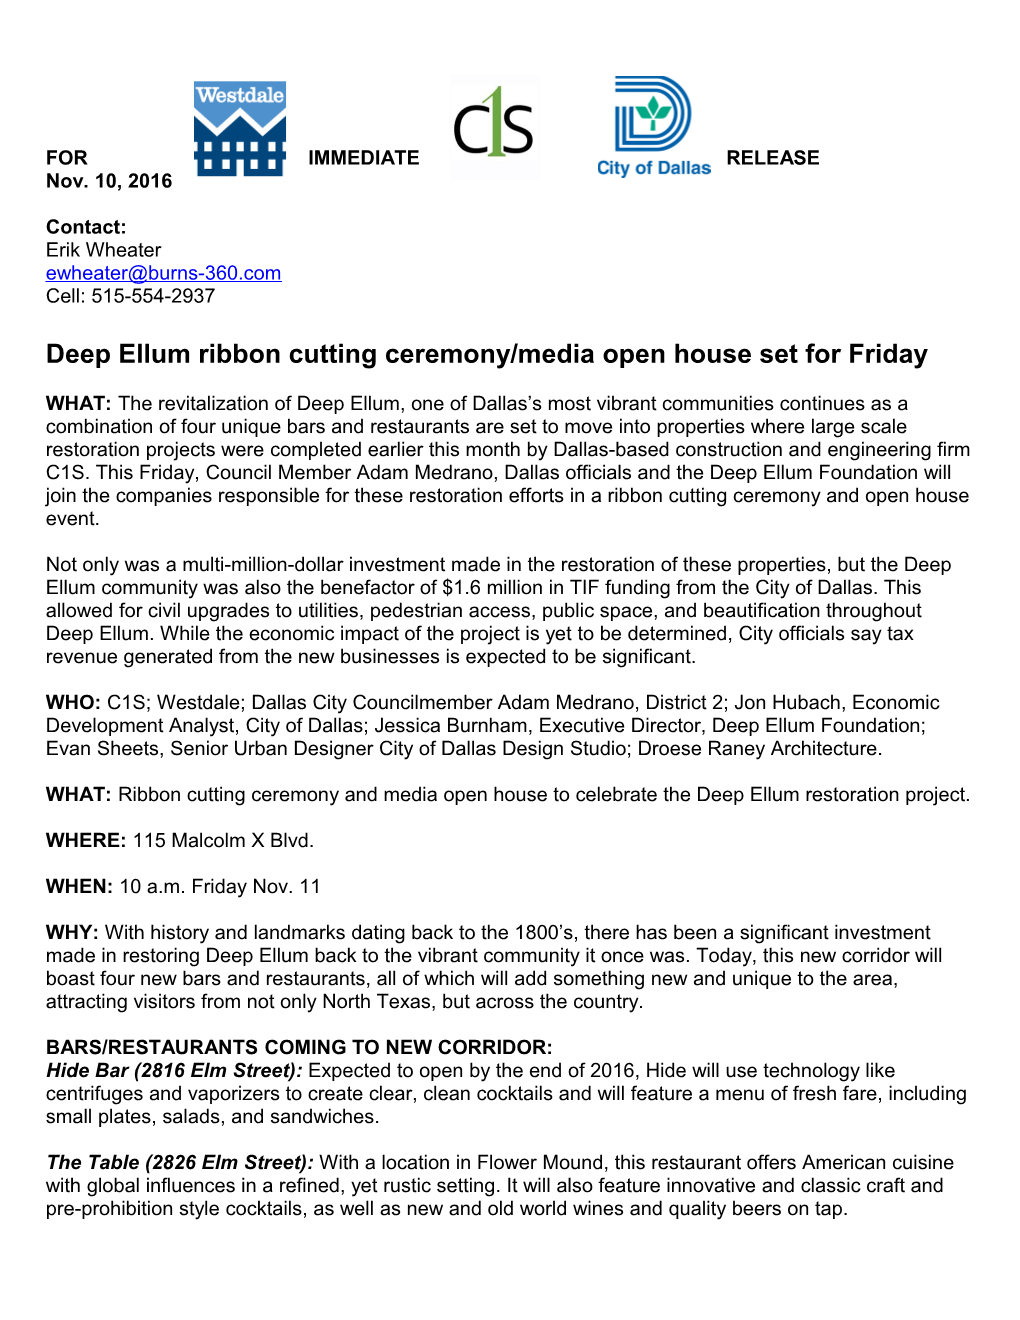 Deep Ellum Ribbon Cutting Ceremony/Media Open House Set for Friday